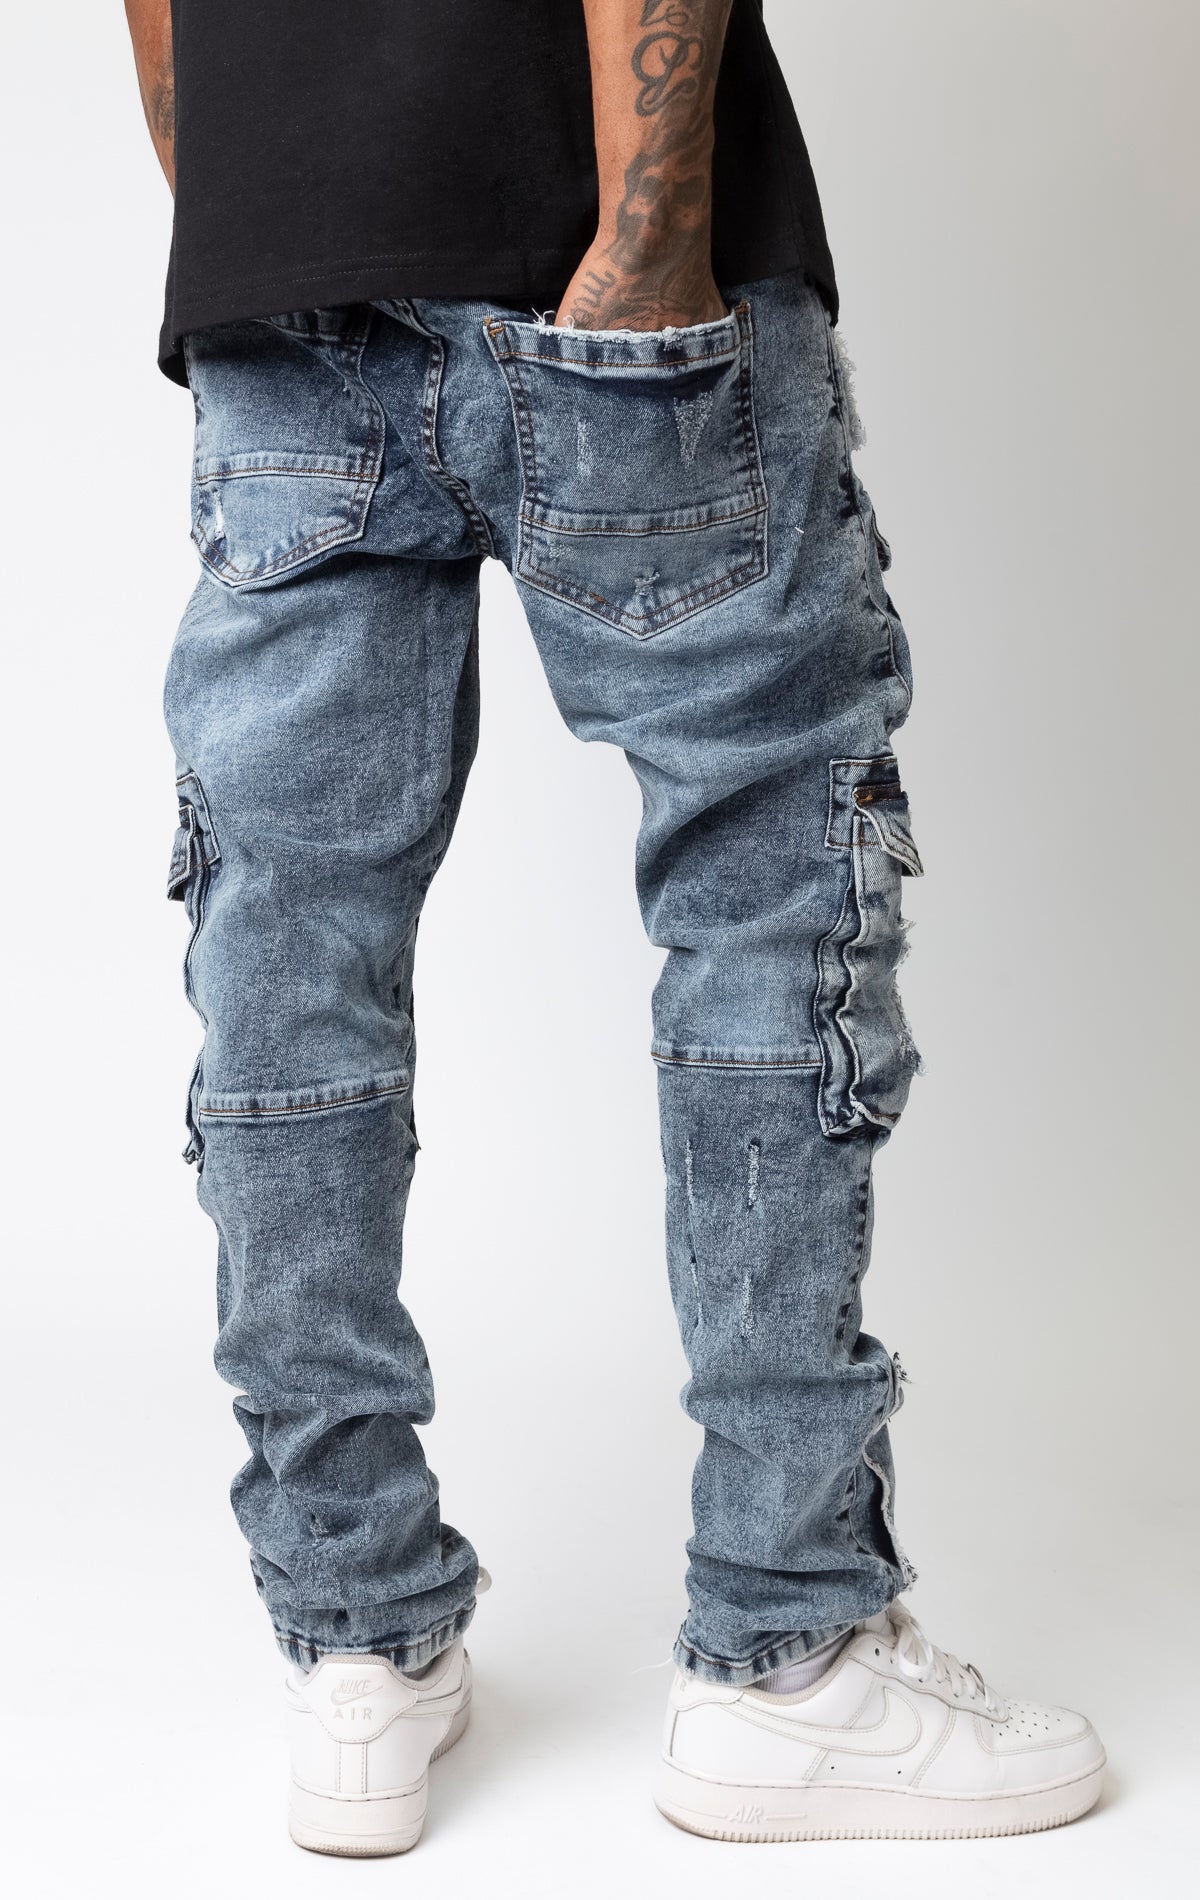 Slim fit cargo denim jeans featuring blue washout repair details.